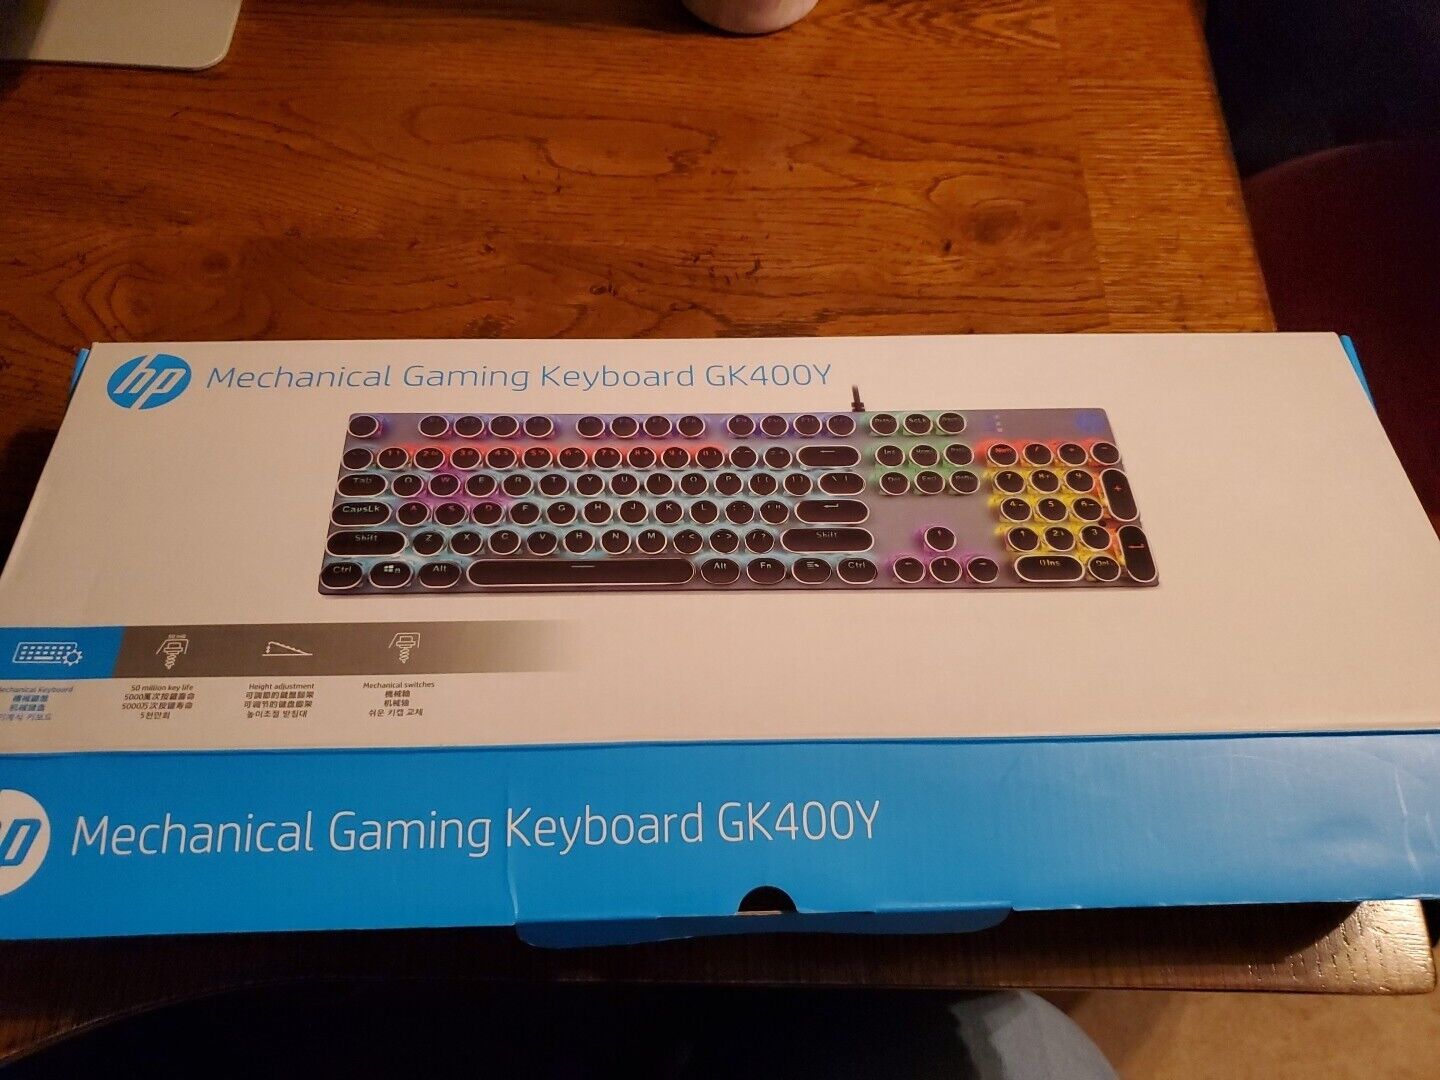 HP Mechanical Gaming Keyboard GK400Y  Backlit Color Key Caps Chromelike Accents